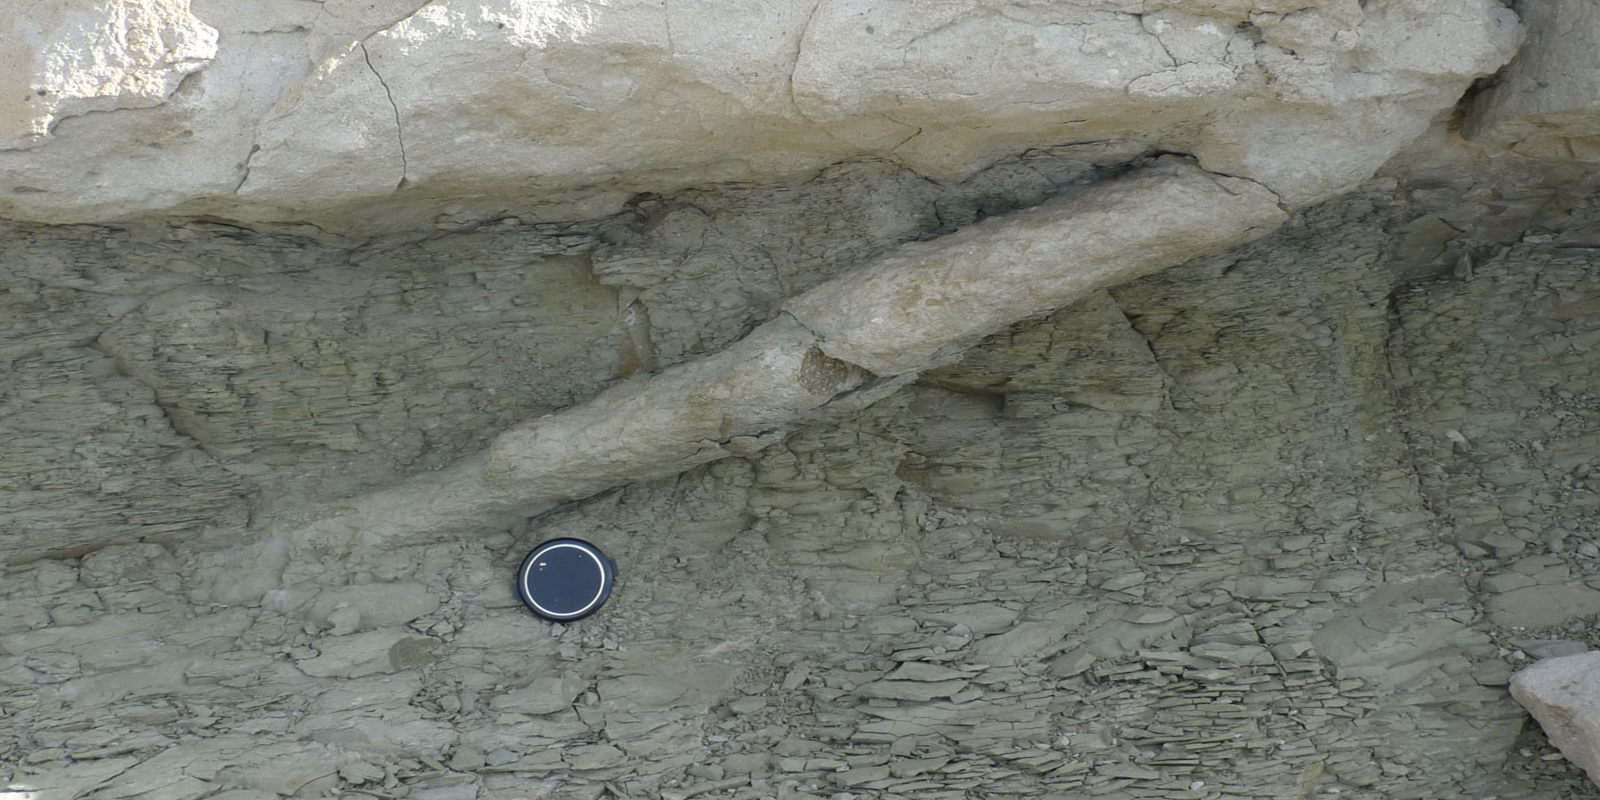 a fossilized animal burrow